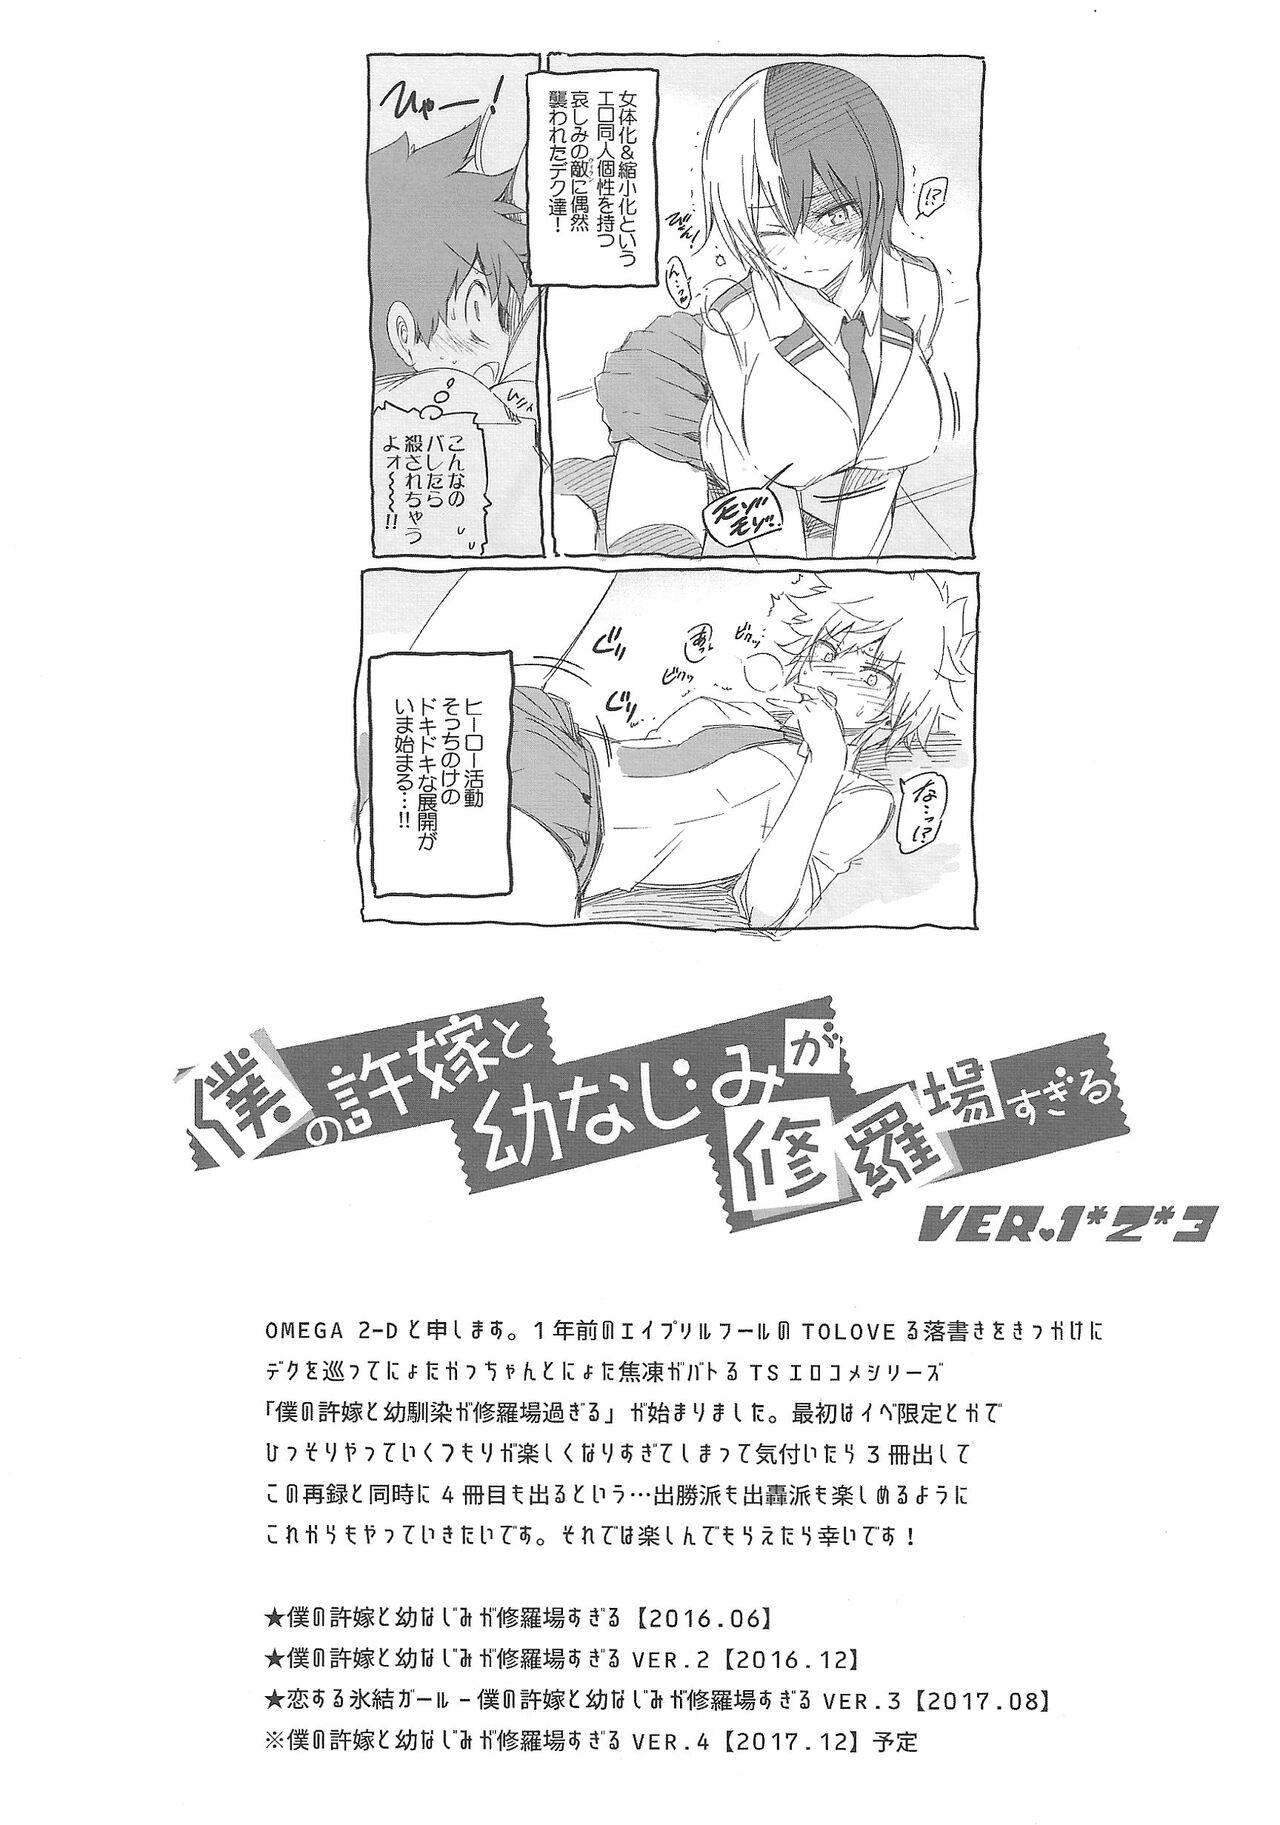 Ink Boku no Iinazuke to Osananajimi ga Shuraba Sugiru Volume 1, 2 & 3 - My hero academia | boku no hero academia Old Young - Page 3